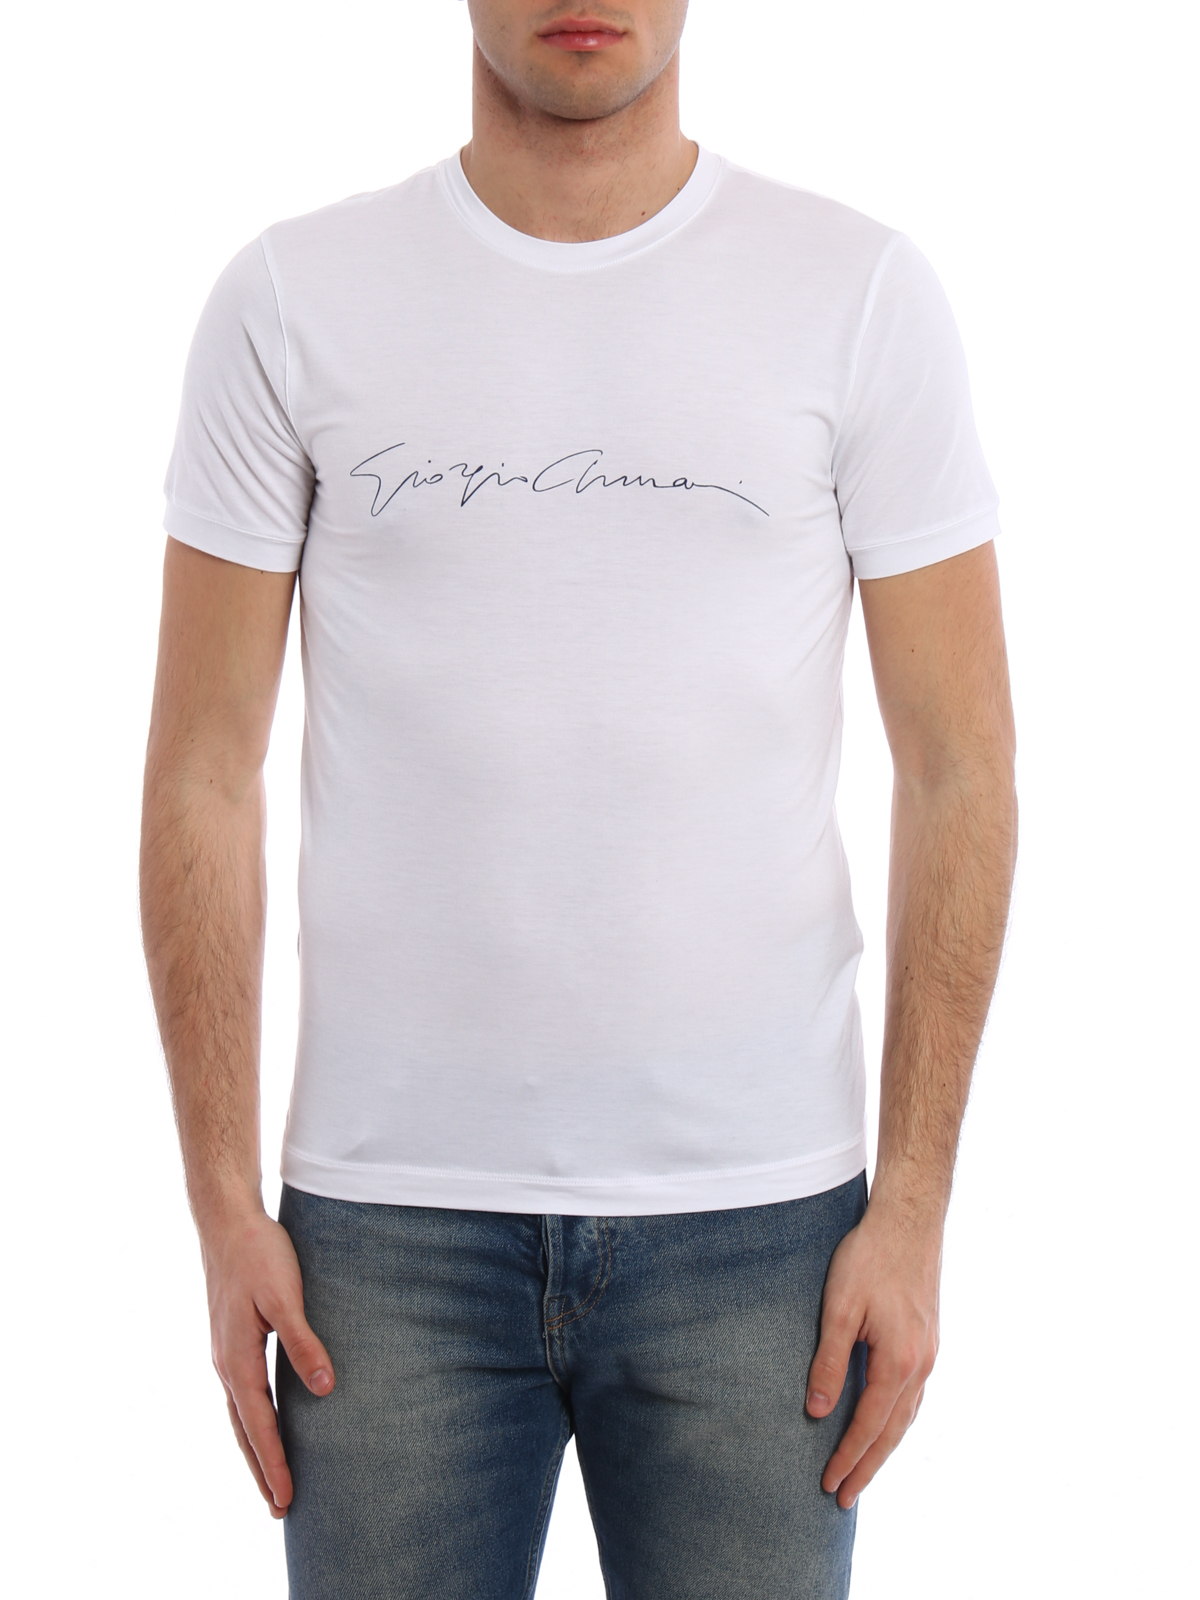 Tシャツ Giorgio Armani - Tシャツ メンズ - 白 - 3YST56SJP4Z0100